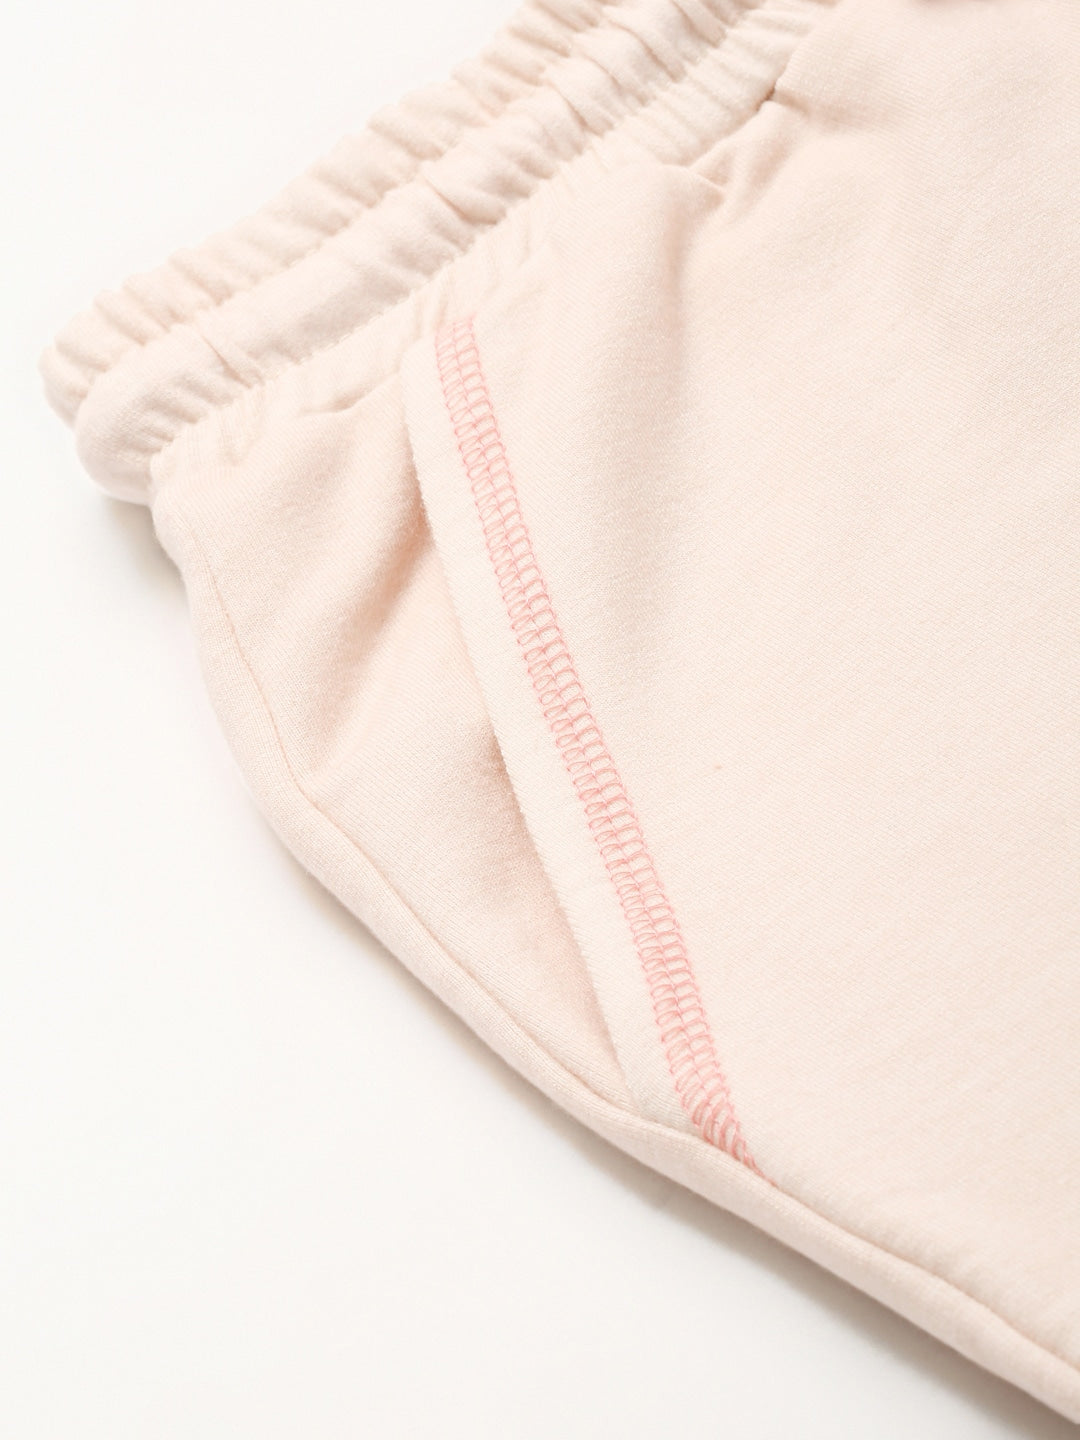 Beige & Pink Typography Printed Sweatshirt with Joggers